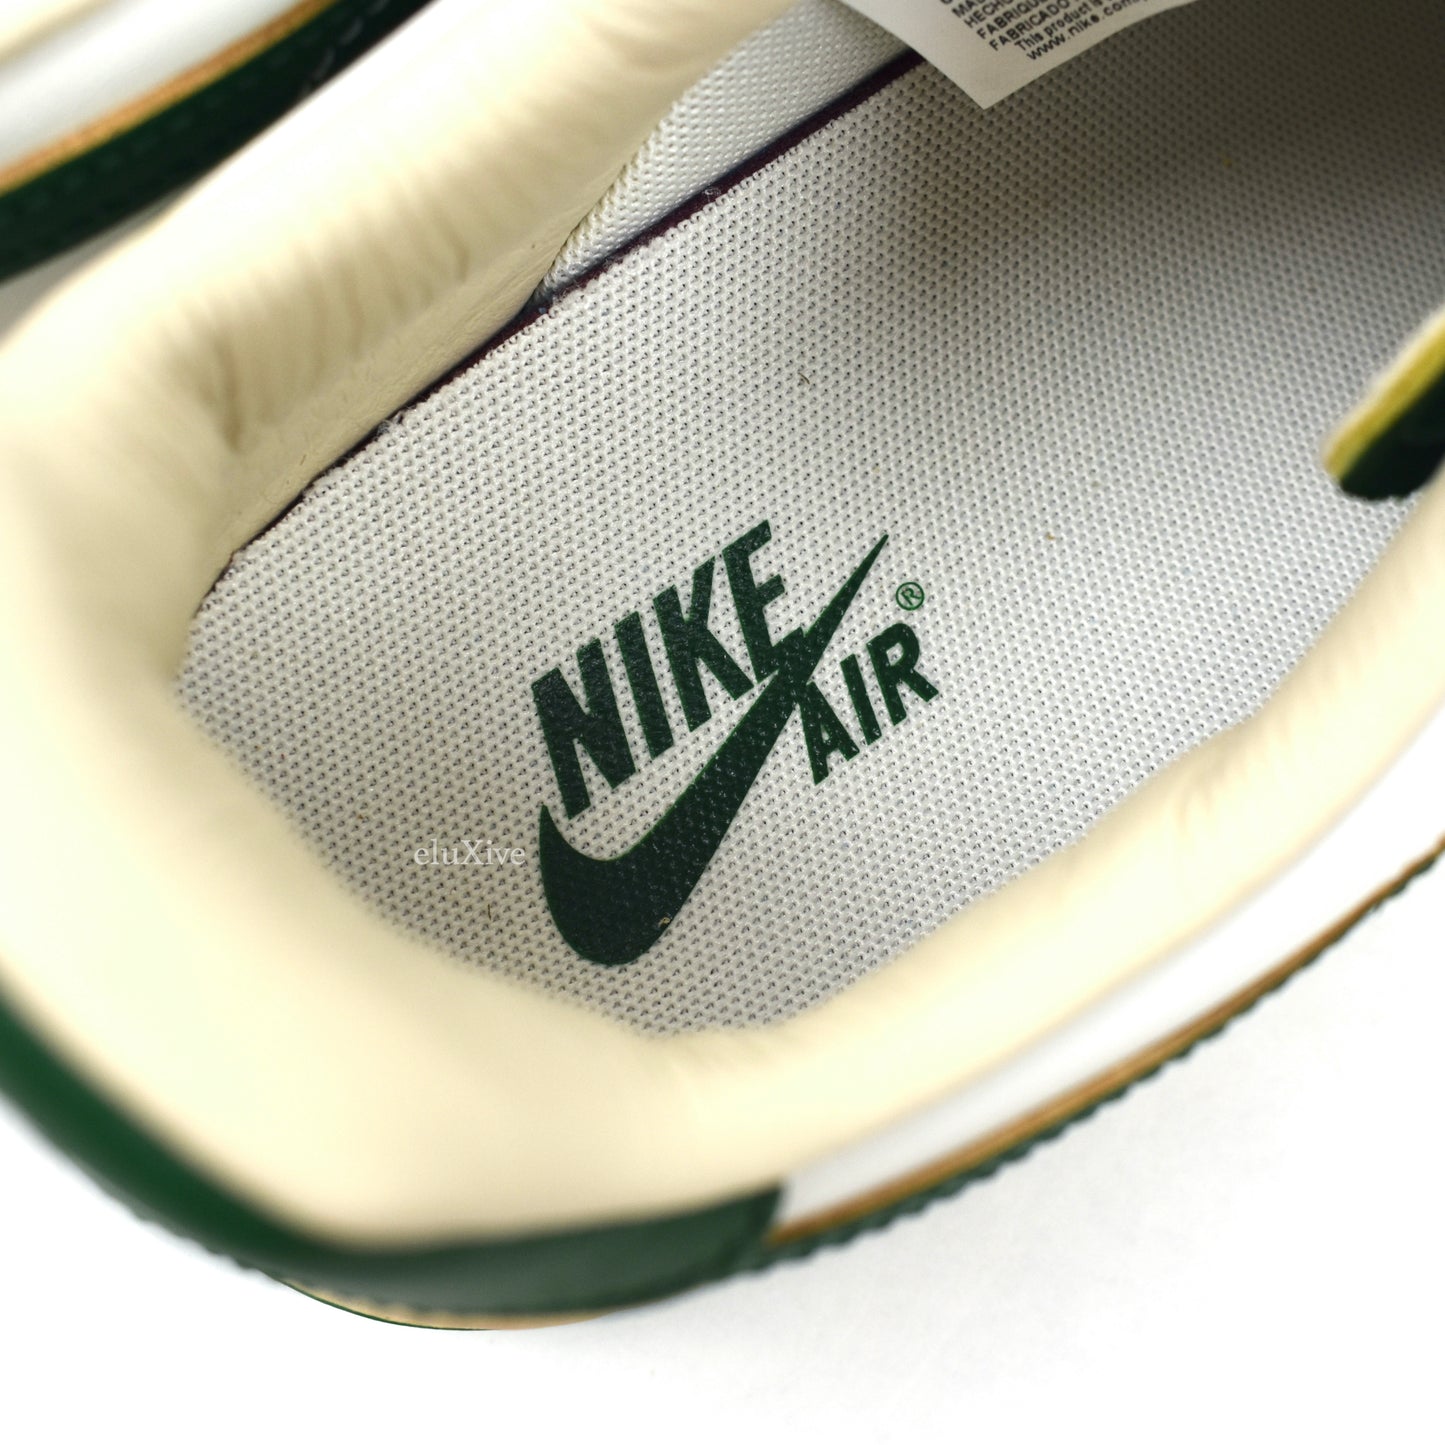 Nike - Air Force 1 '07 LV8 'Vintage 82' (White/Gorge Green)